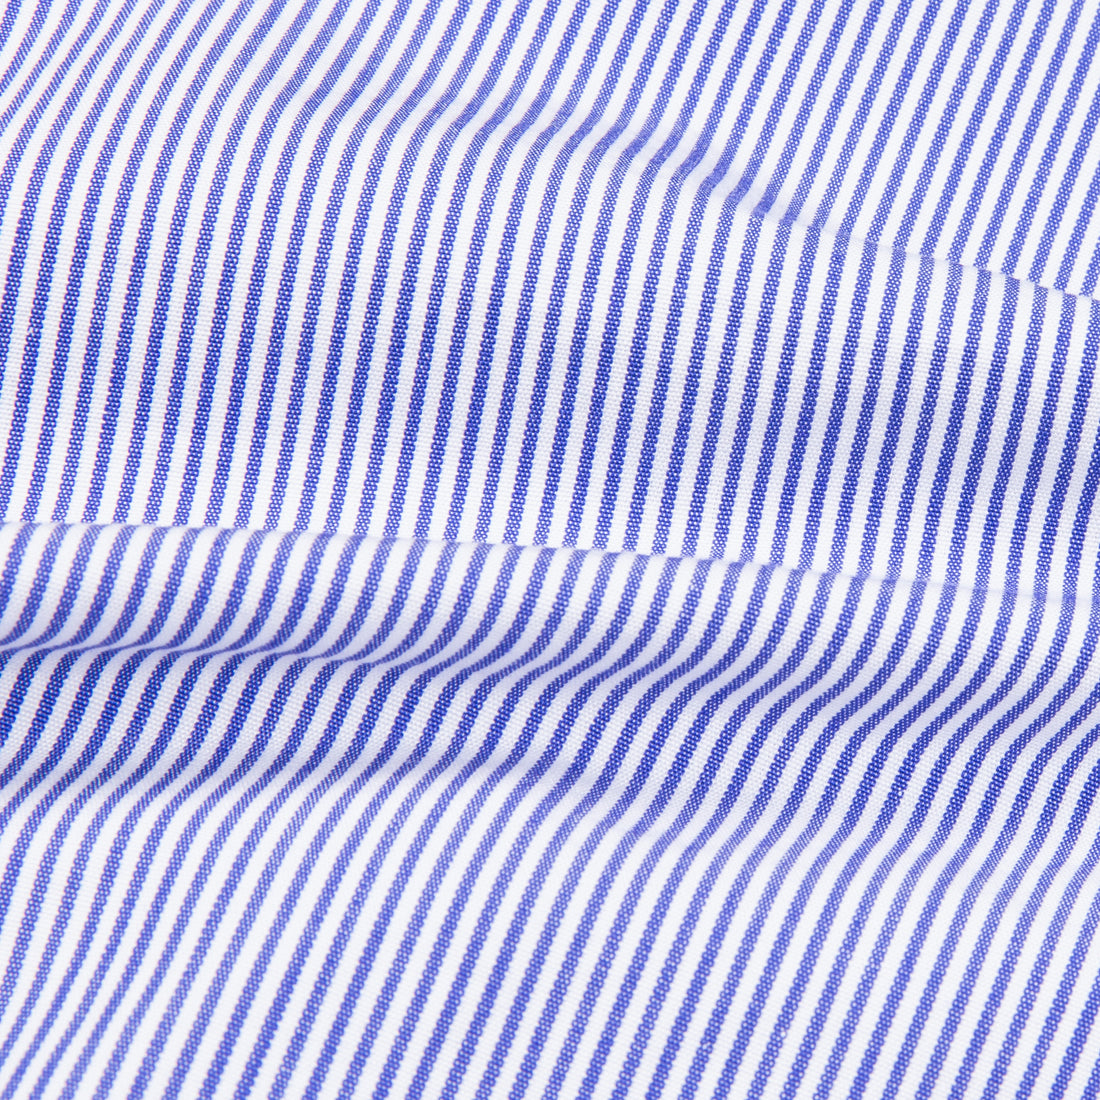 Finamore Tokyo Shirt Sergio Collar Navy Stripe Poplin